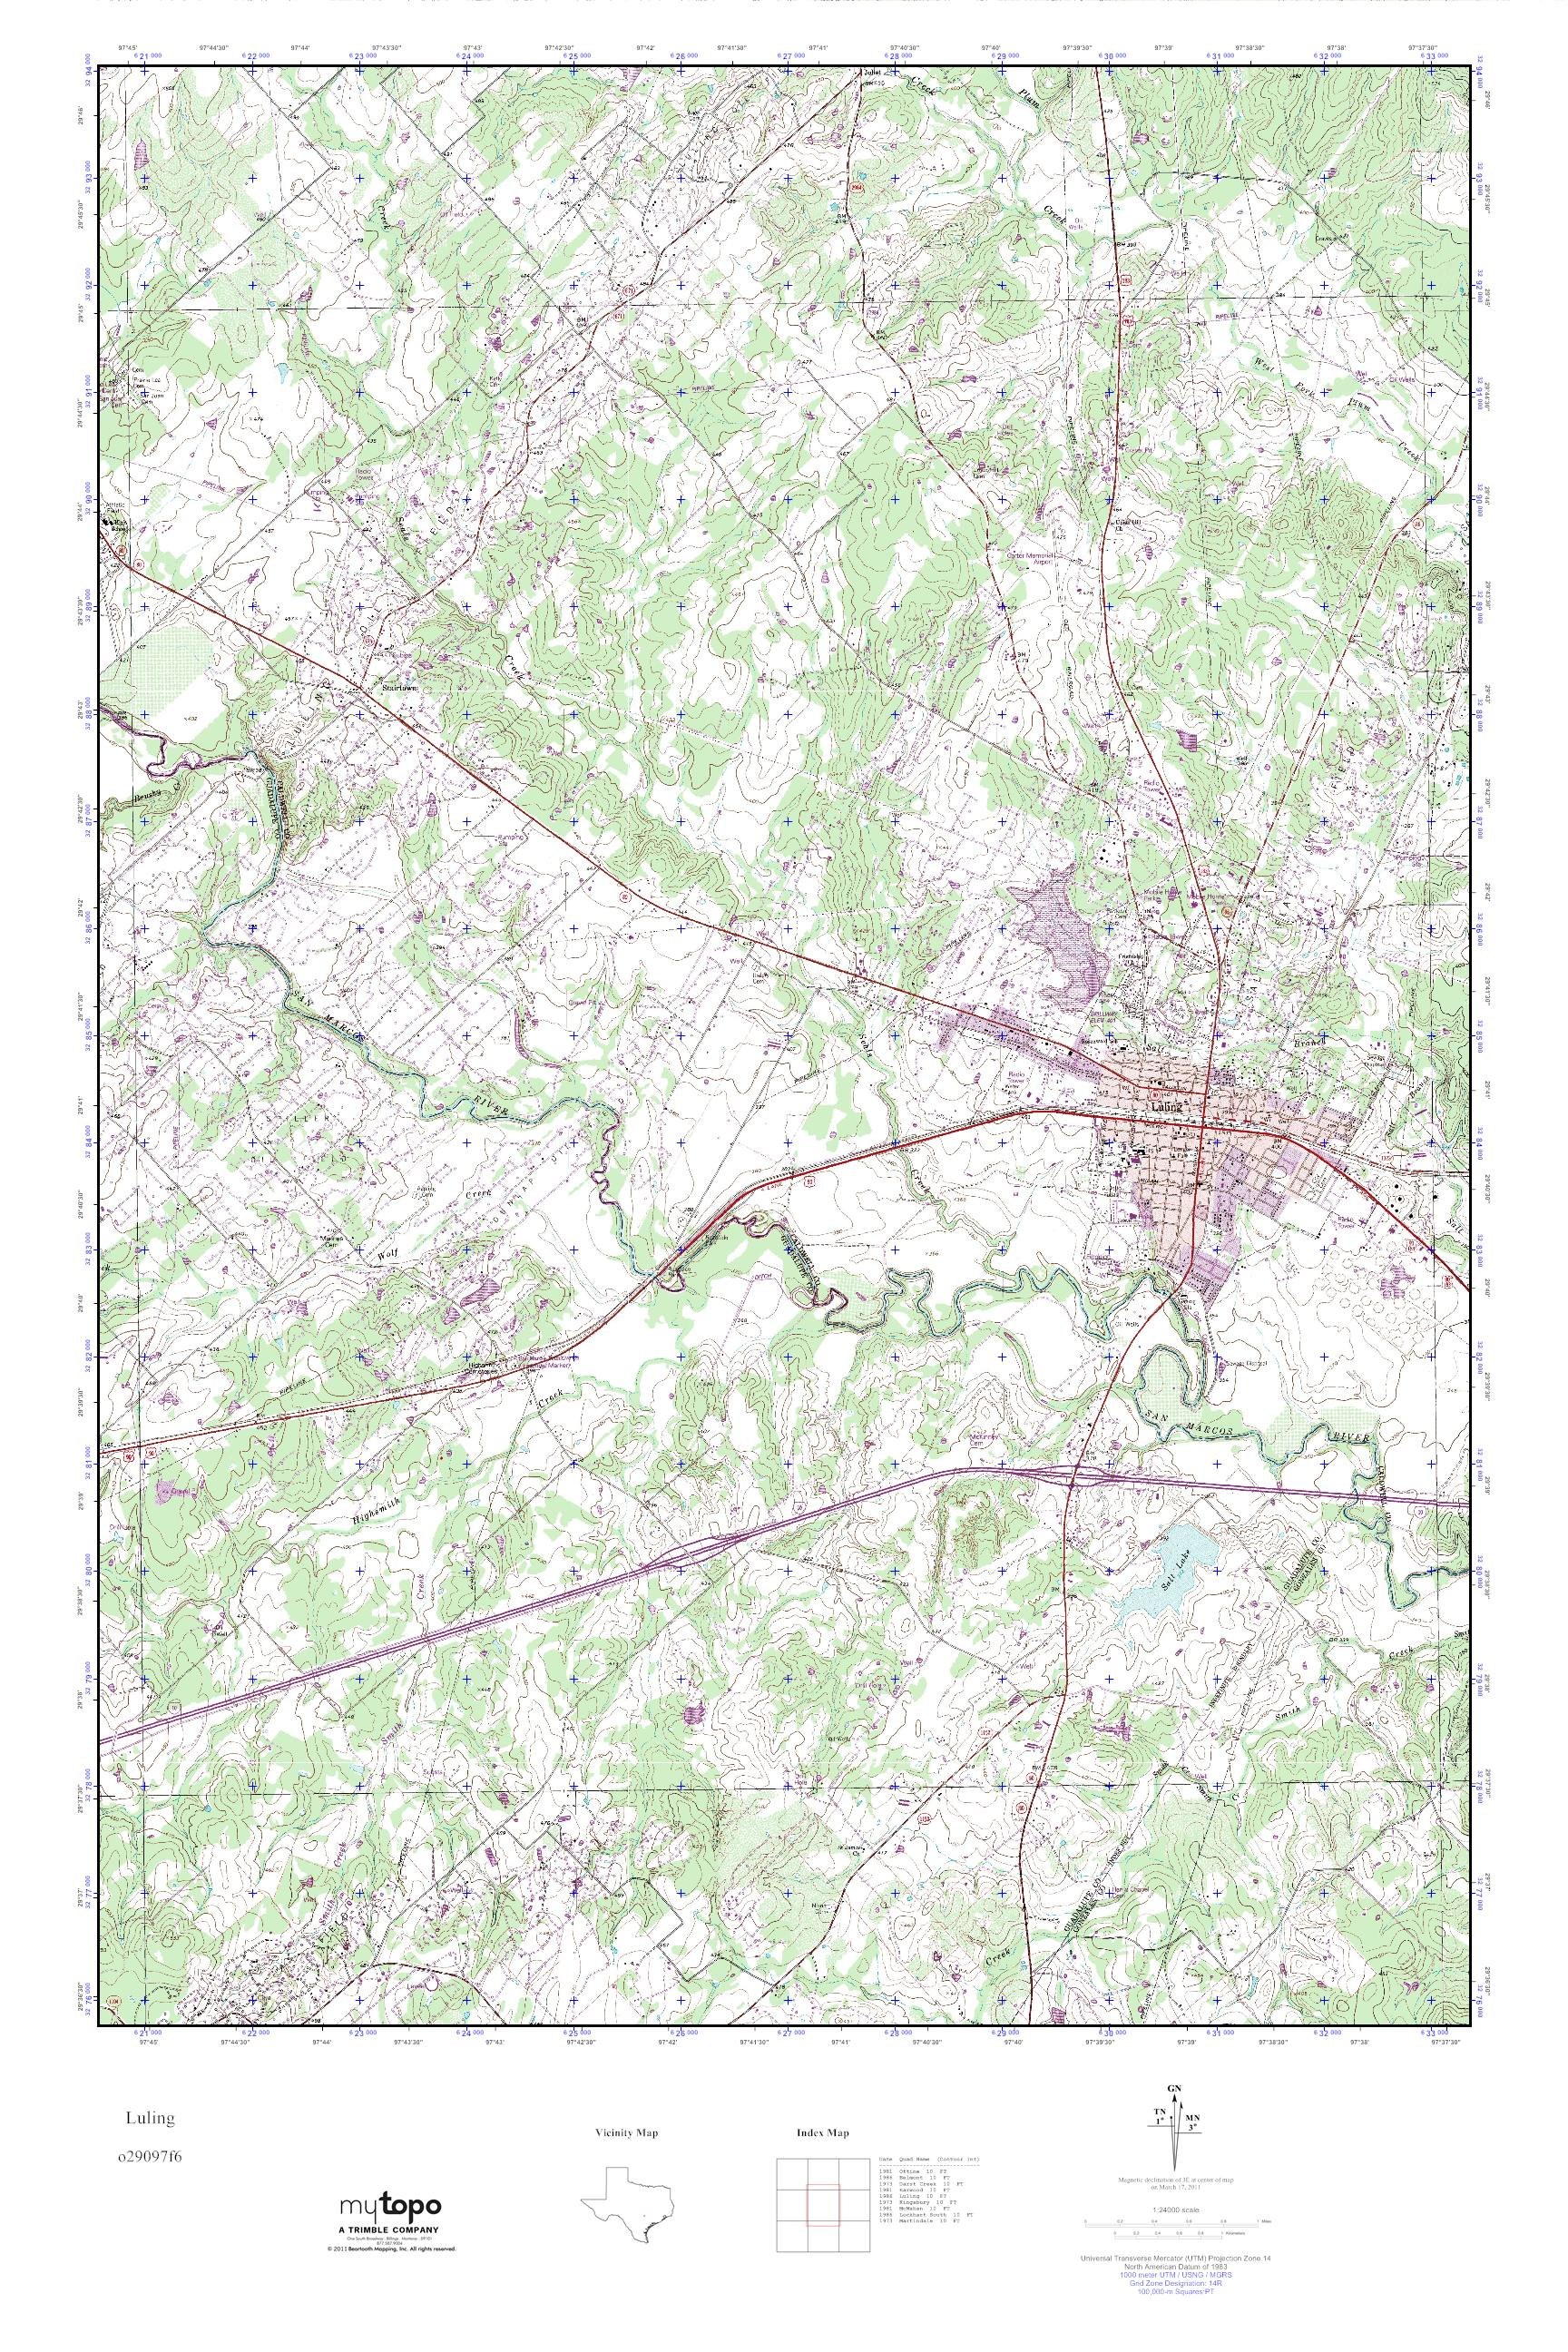 Mytopo Luling, Texas Usgs Quad Topo Map - Luling Texas Map